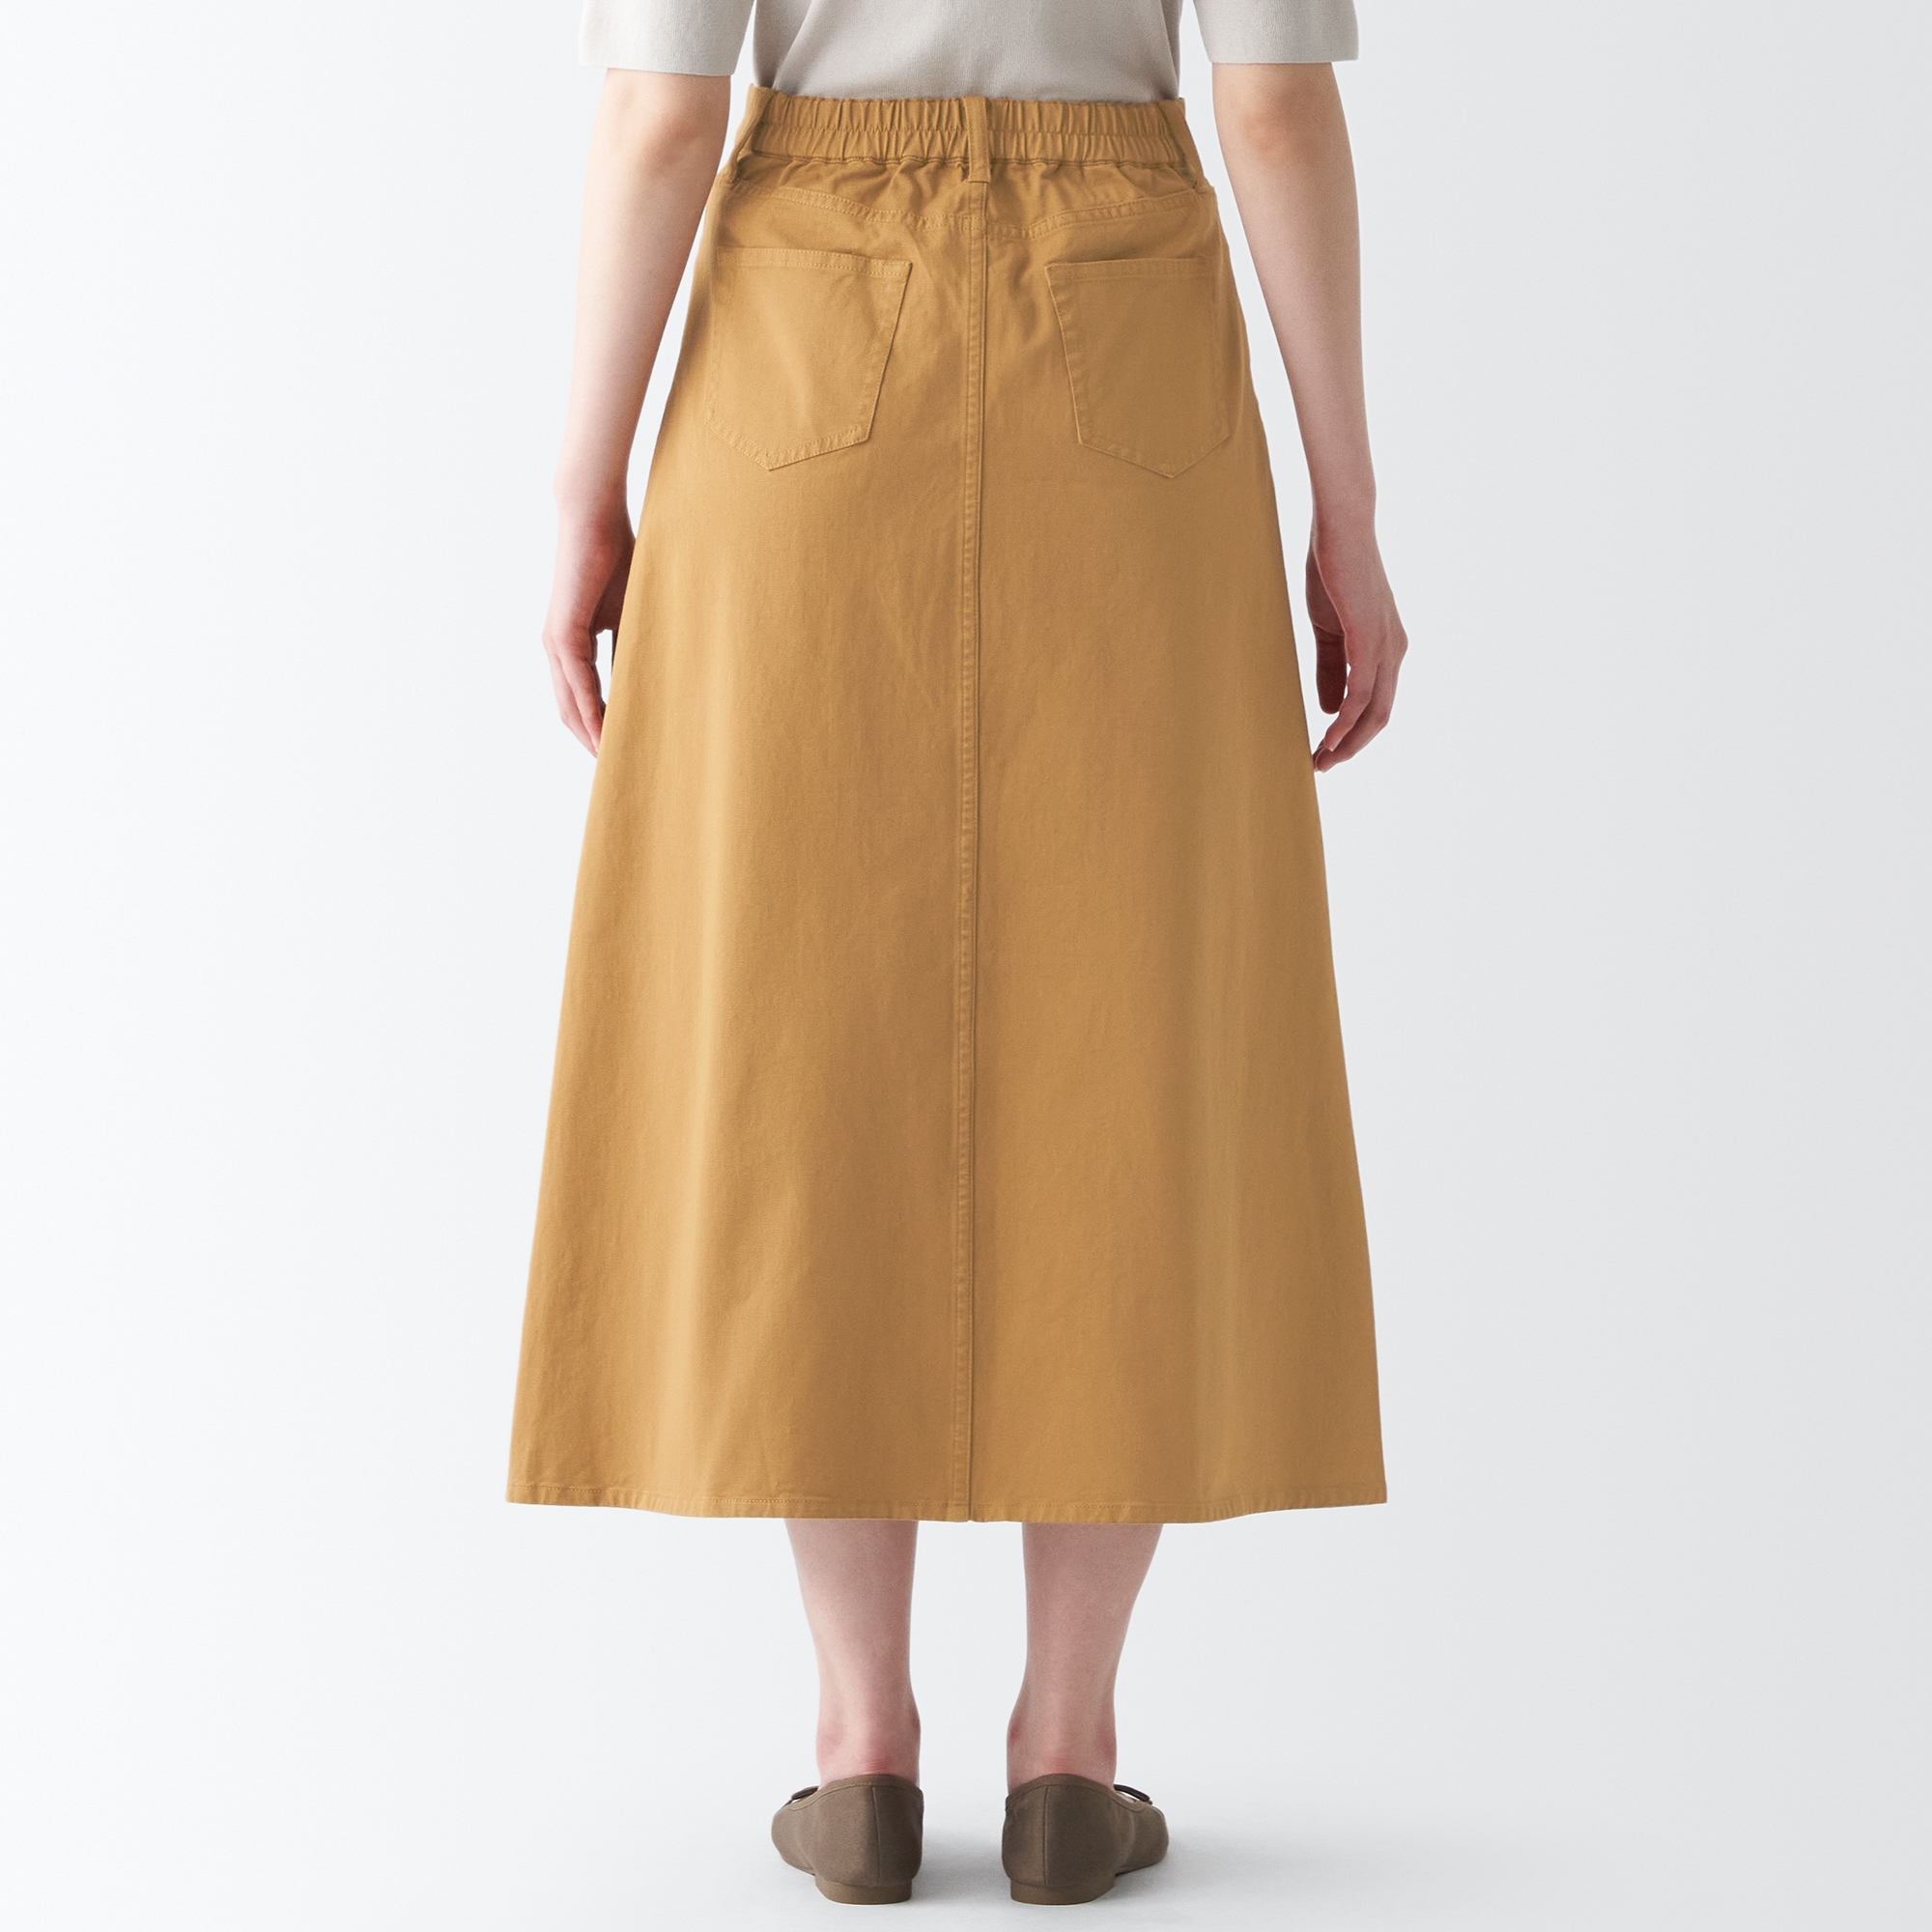 4-Way stretch chino A-line skirt